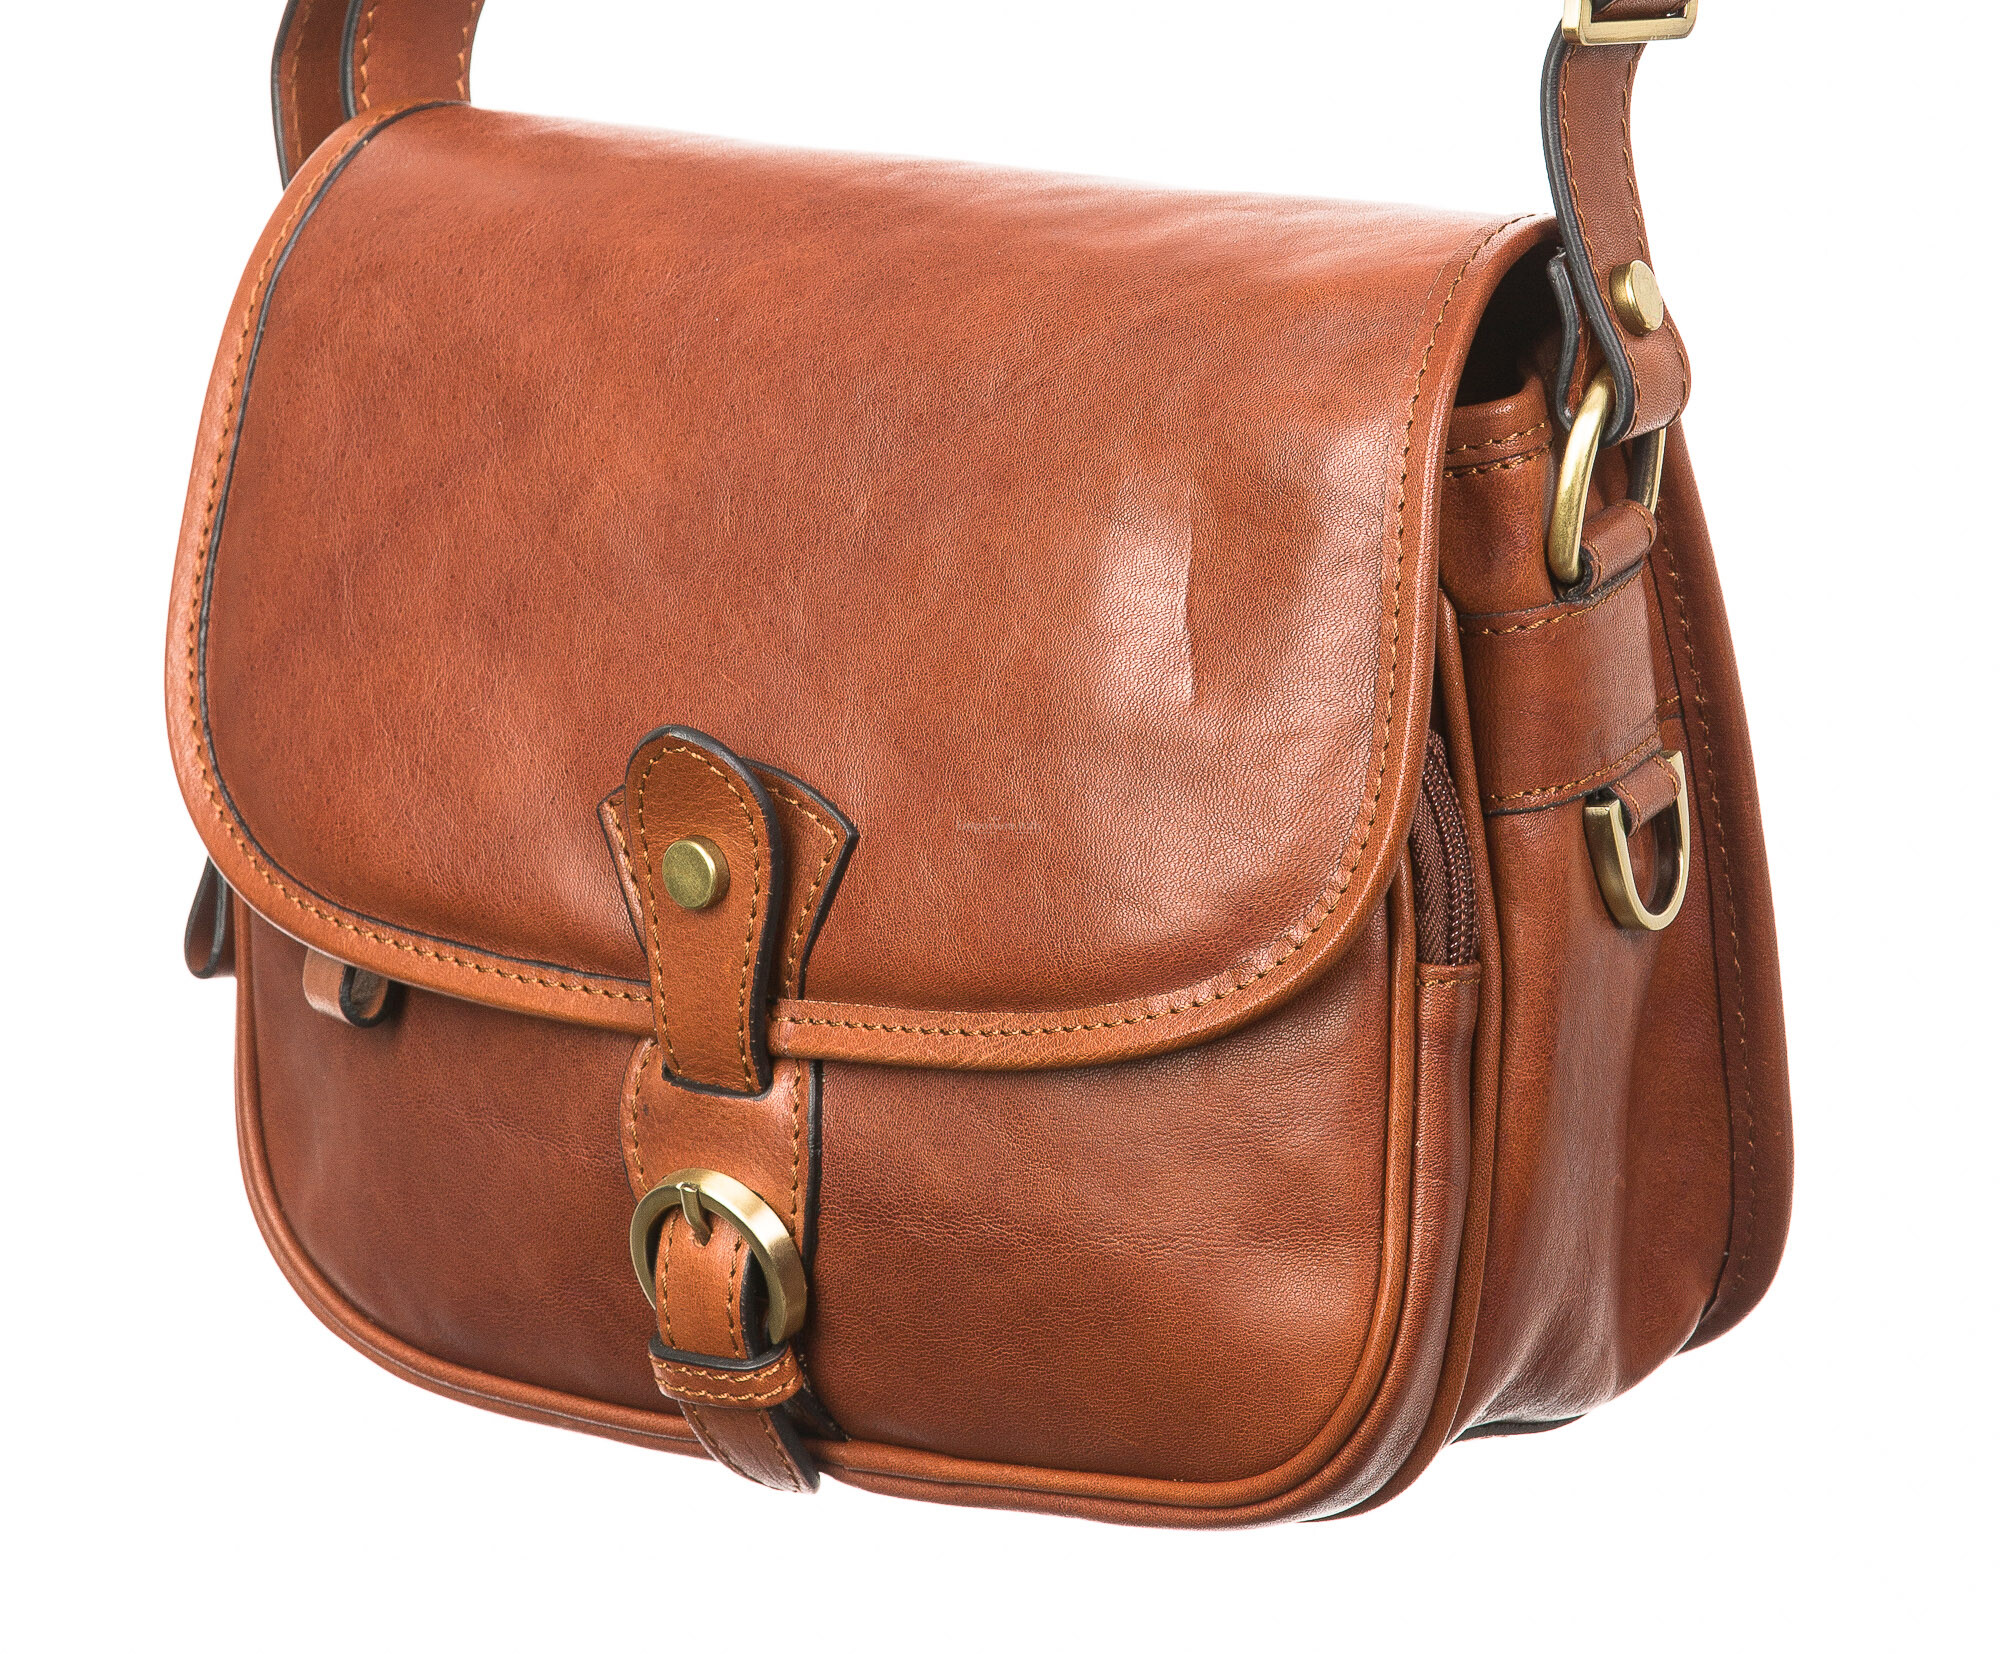 Ladies genuine leather bag SANTINI mod. LANA, HONEY, Made in Italy.